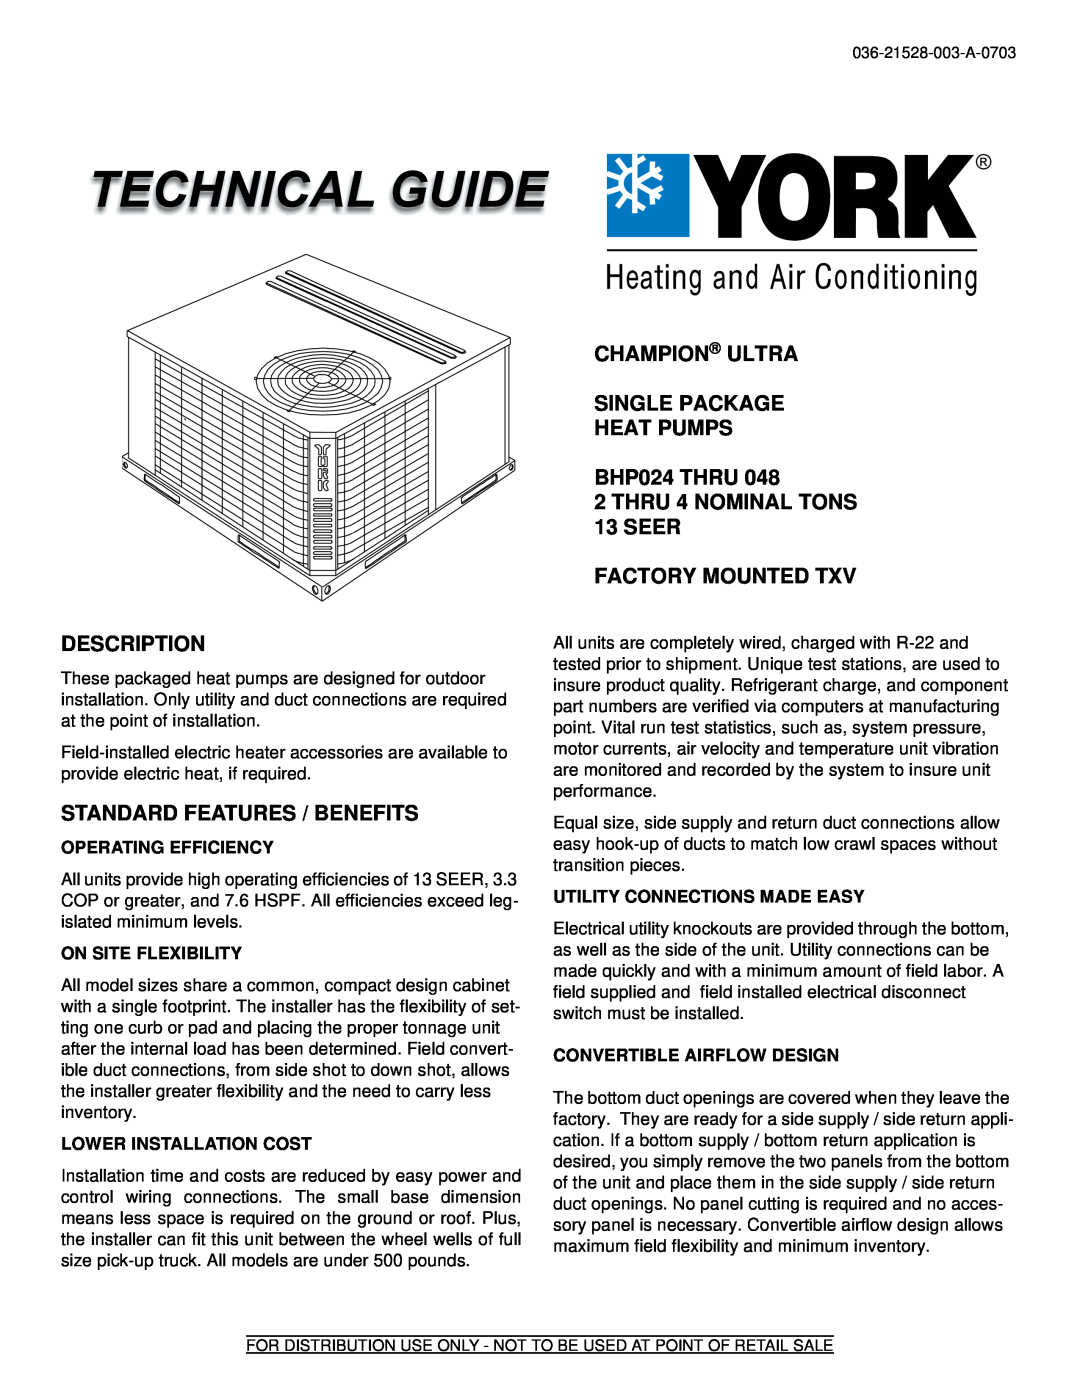 York BHP024 manual Description, Standard Features / Benefits, Affinity Series Single Package Heat Pumps 